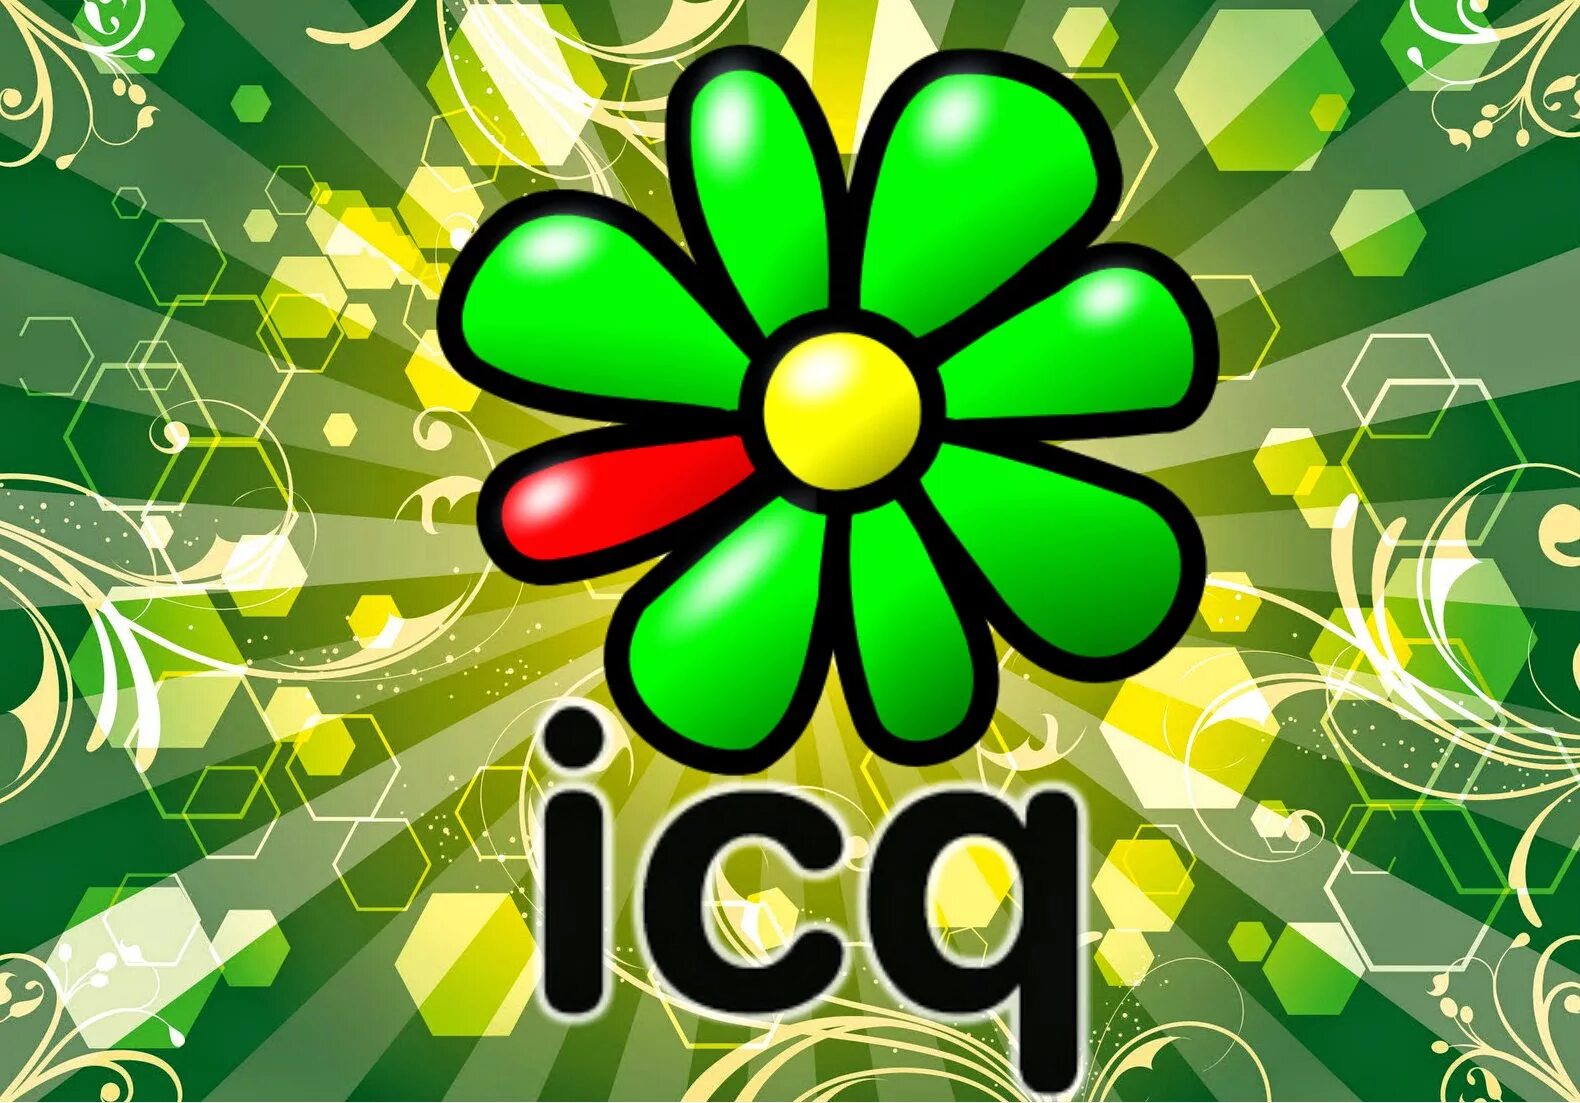 Icq мессенджер. ICQ. ICQ логотип. ICQ фото. Картинки для аськи.